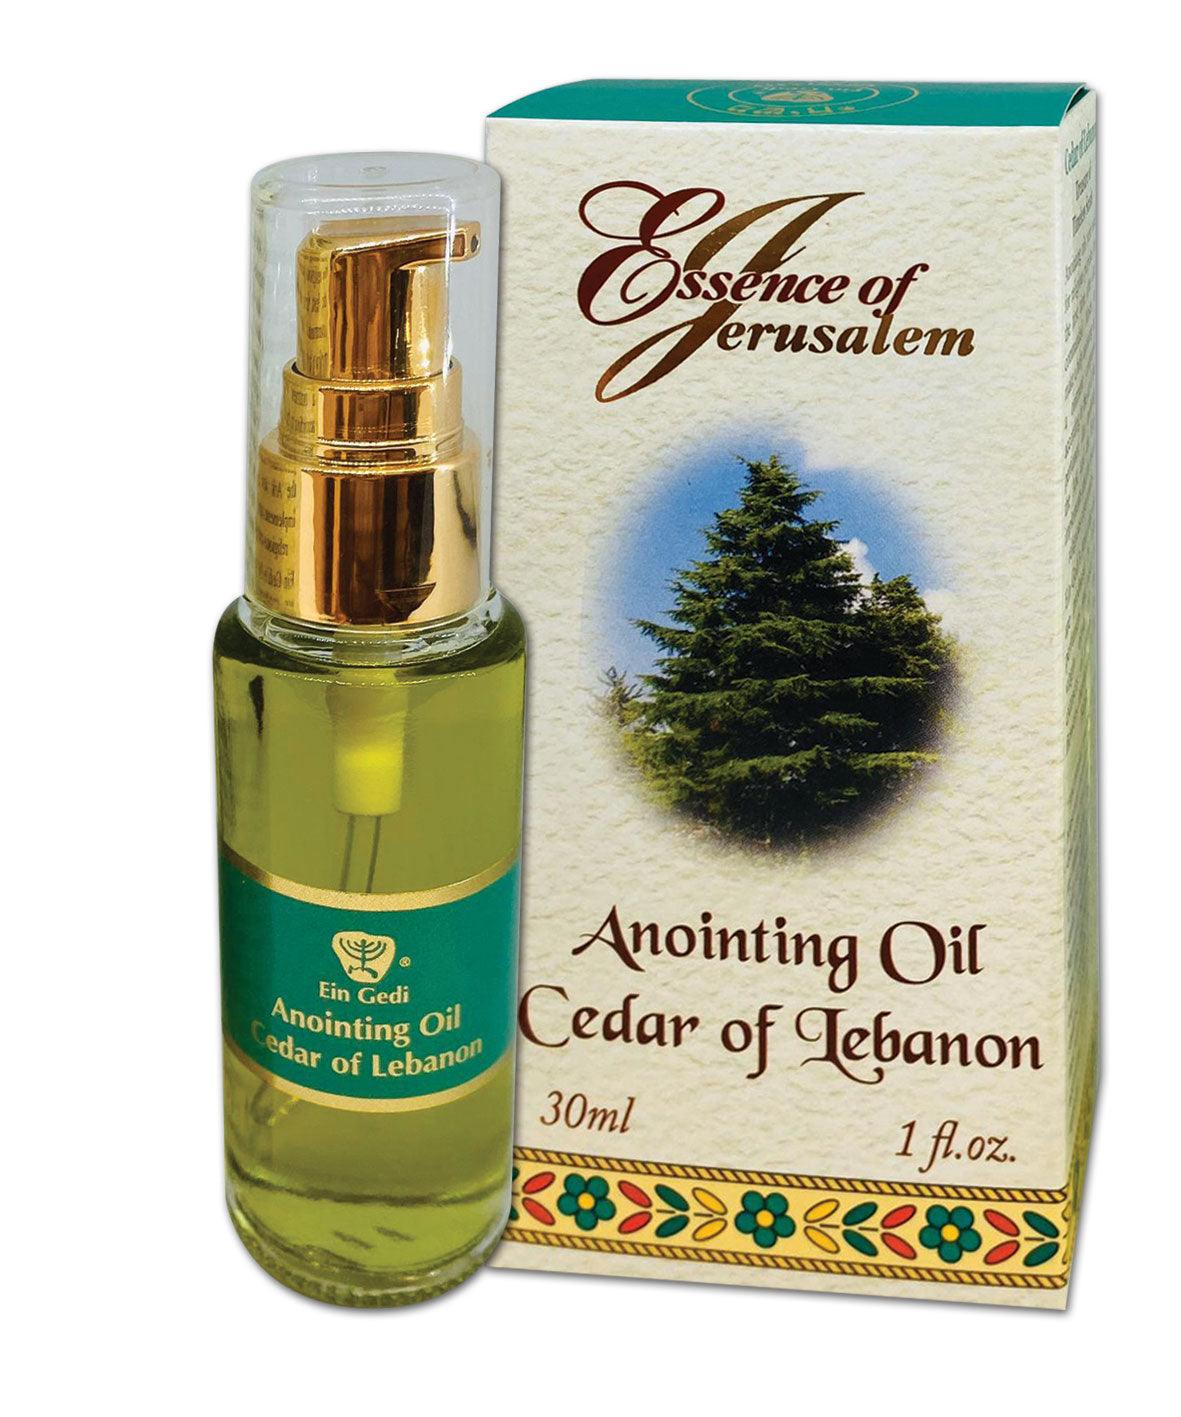 Cedar of Lebanon Essence of Jerusalem Anointing Oil 30ml/1 fl.oz.jpg